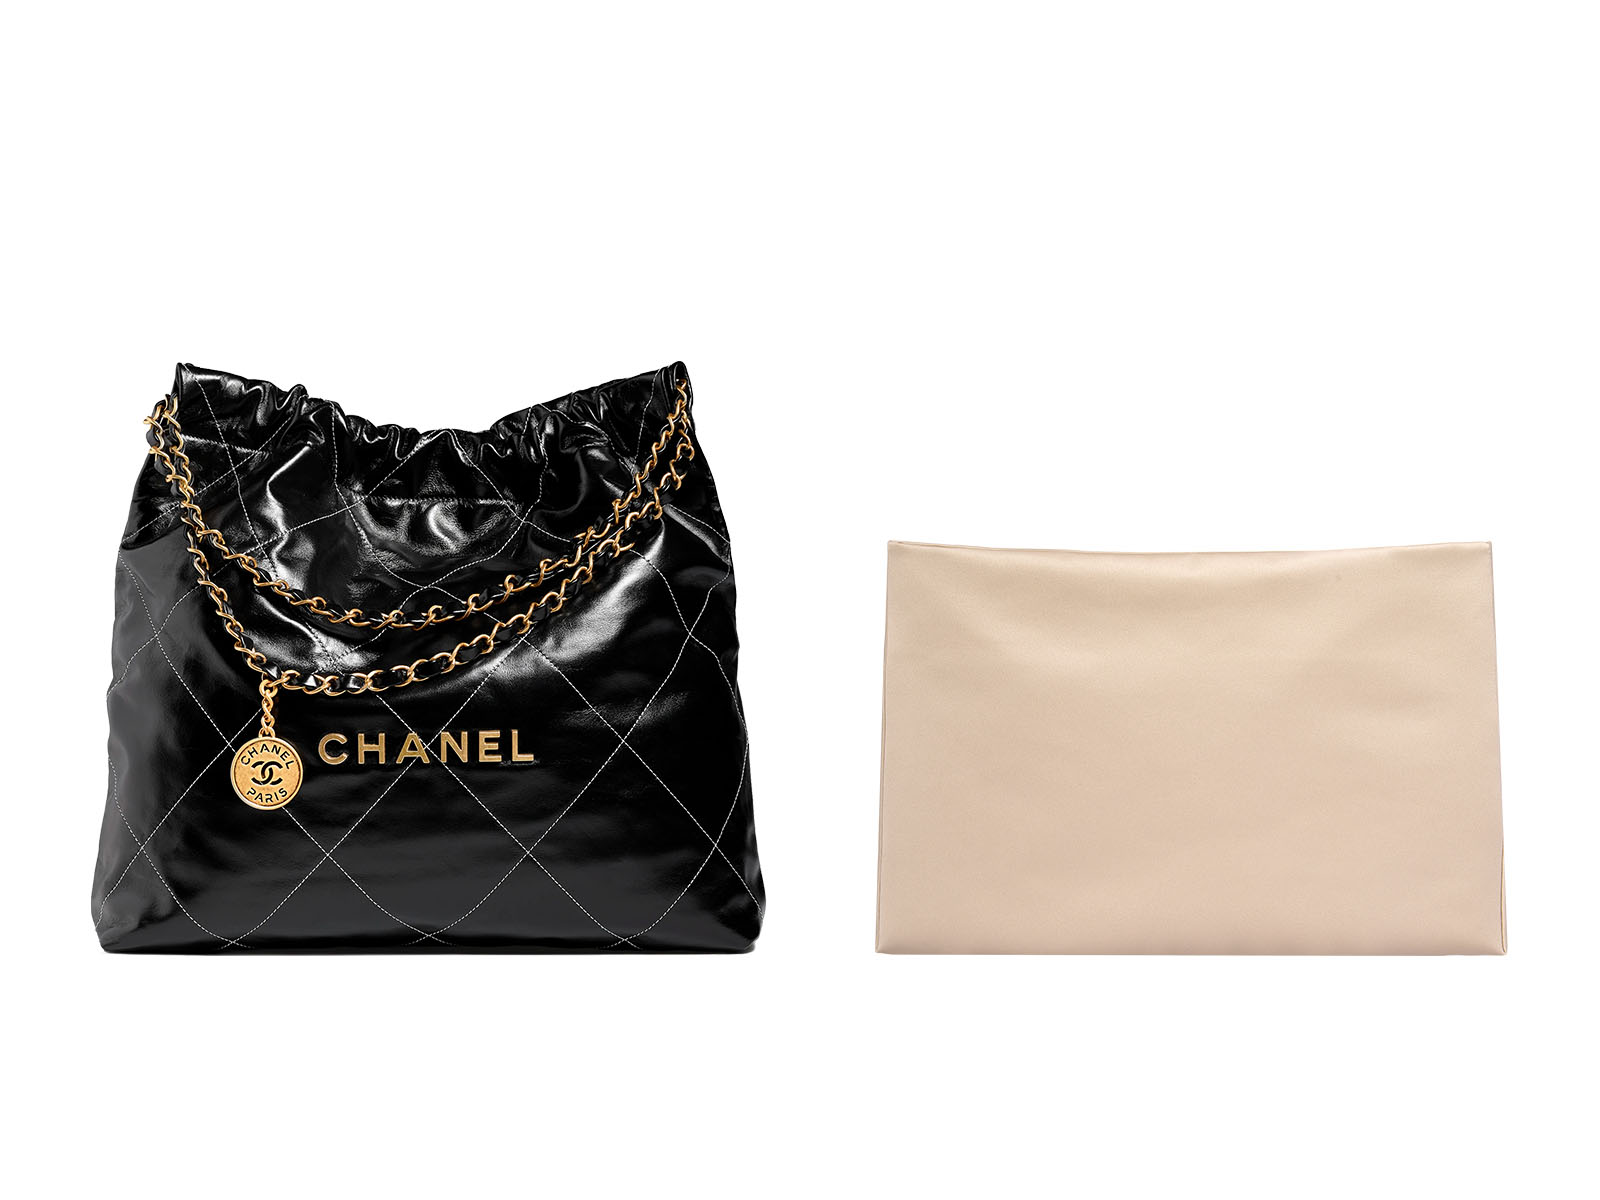 Chanel 22 中號專用喬莉包內袋